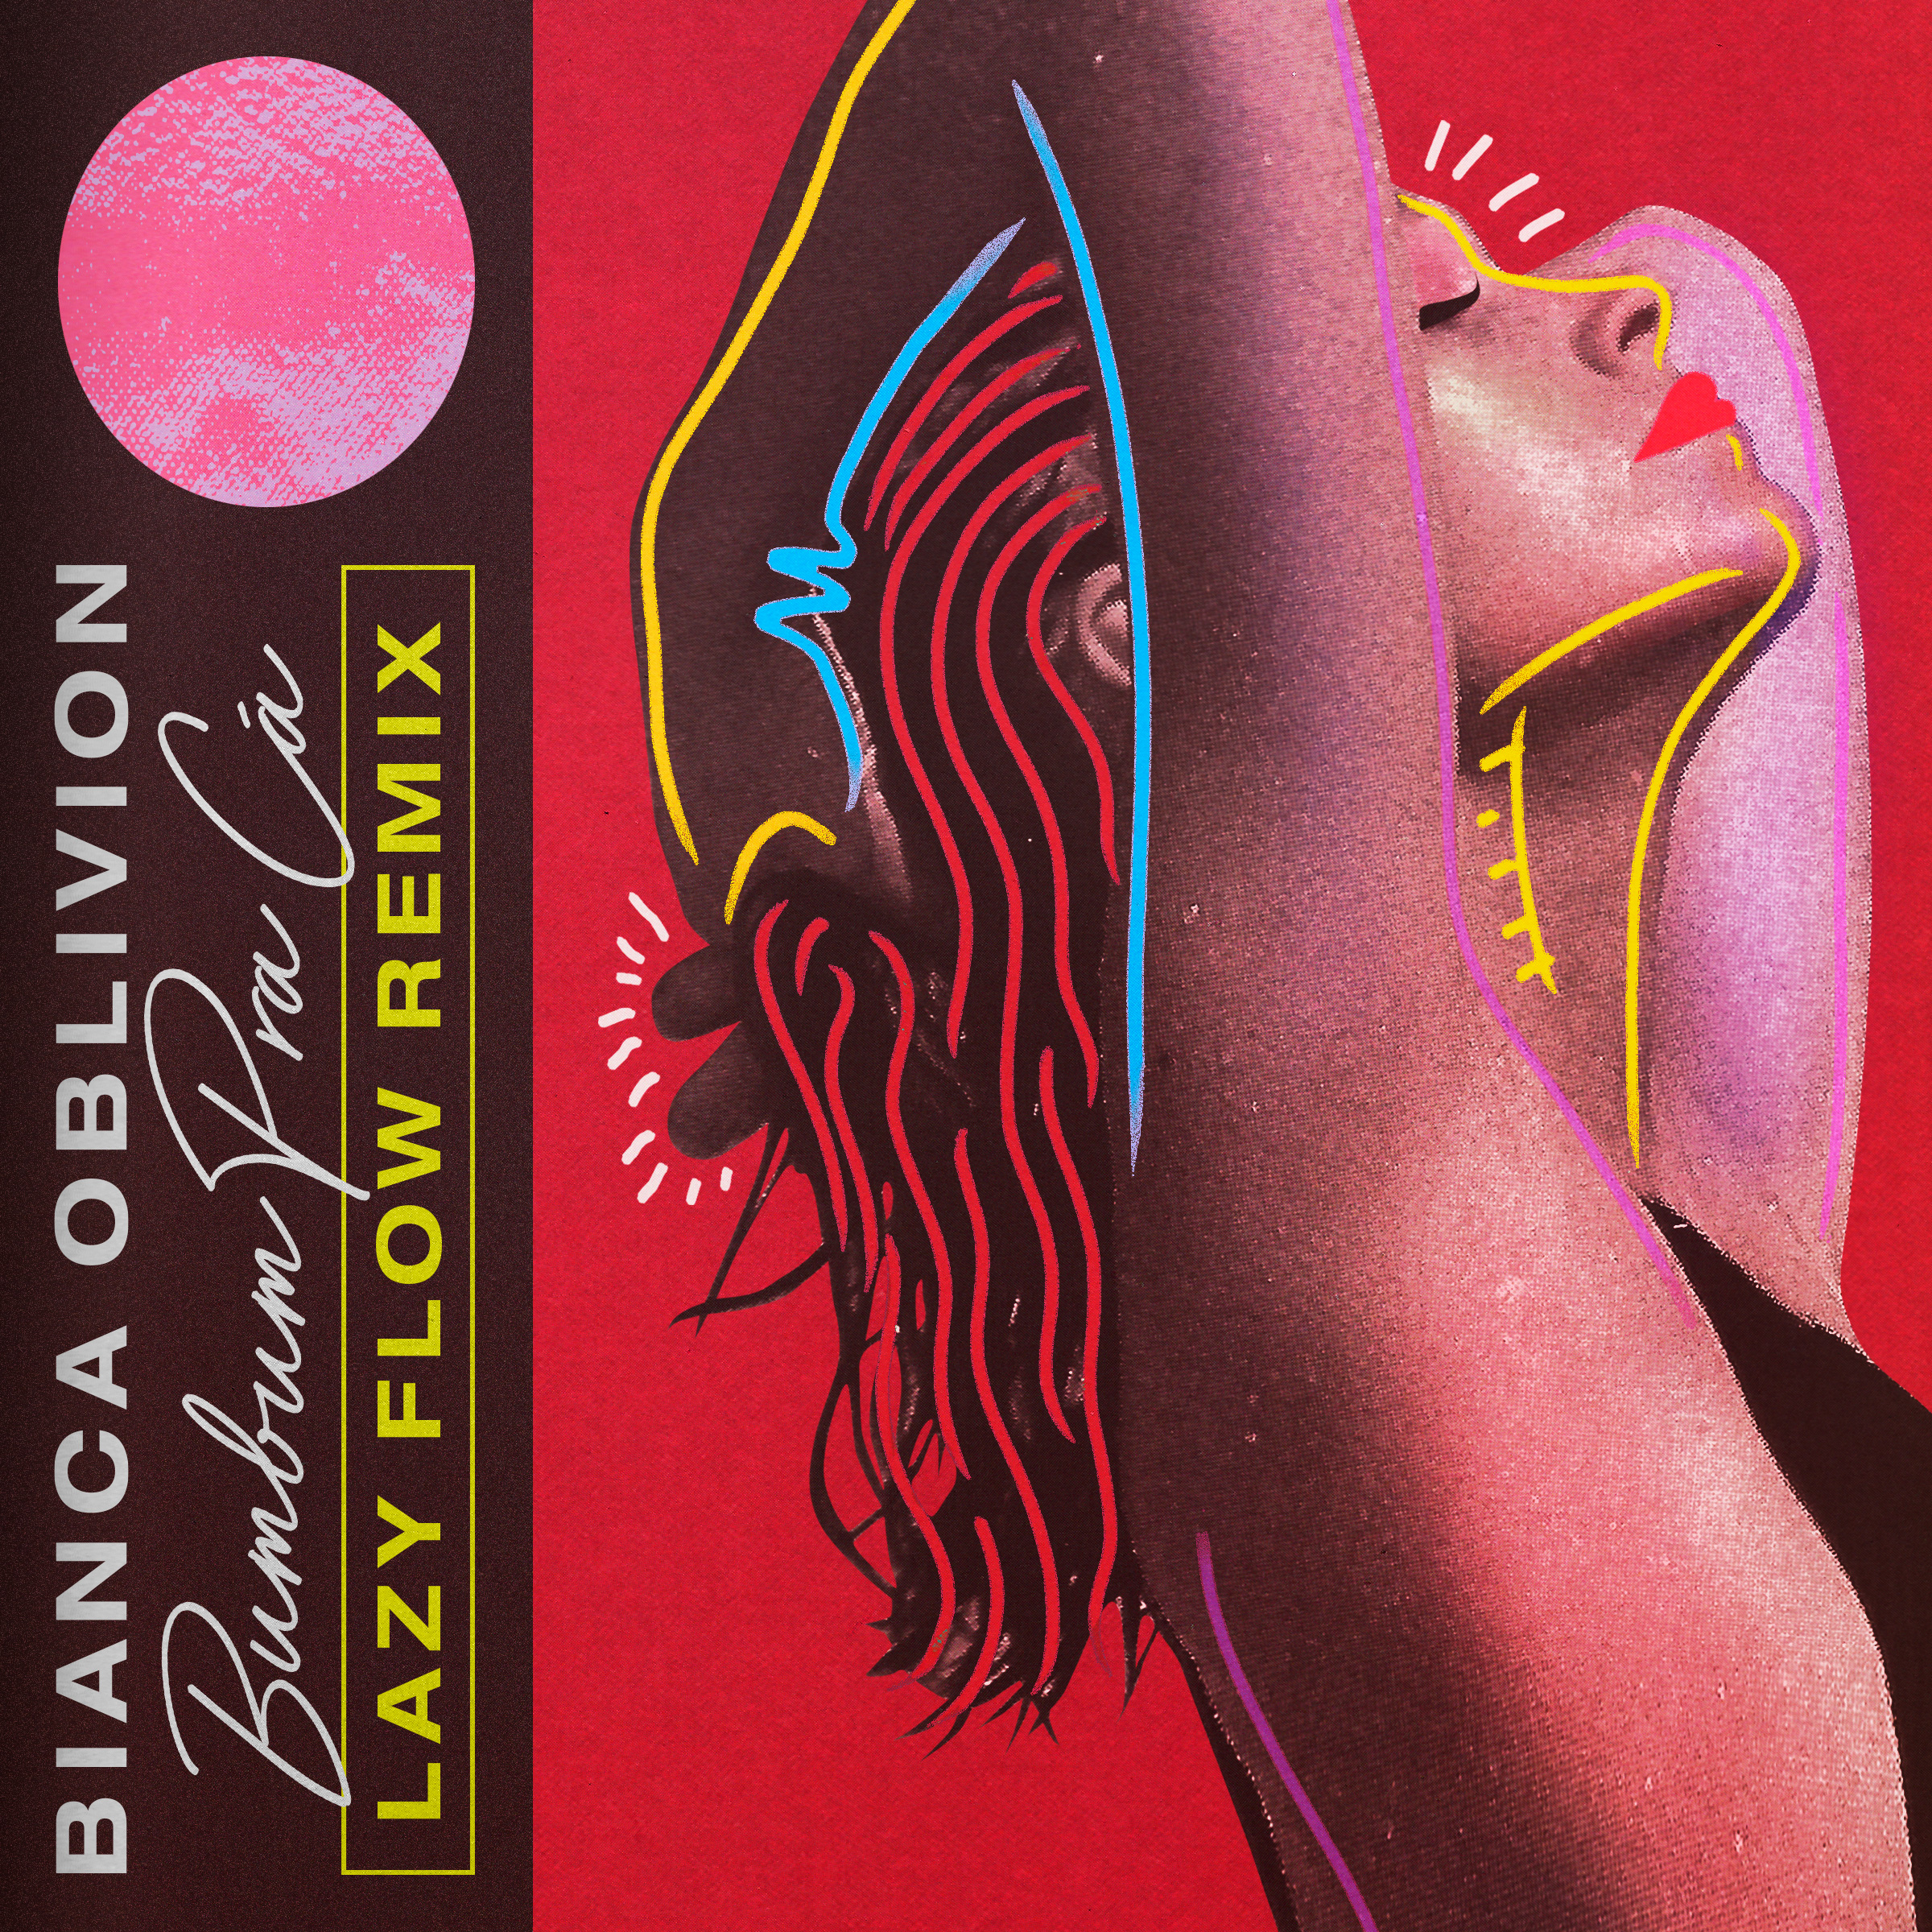 Scaricamento [PREMIERE] Bianca Oblivion - Bumbum Pra Cá (Lazy Flow remix)